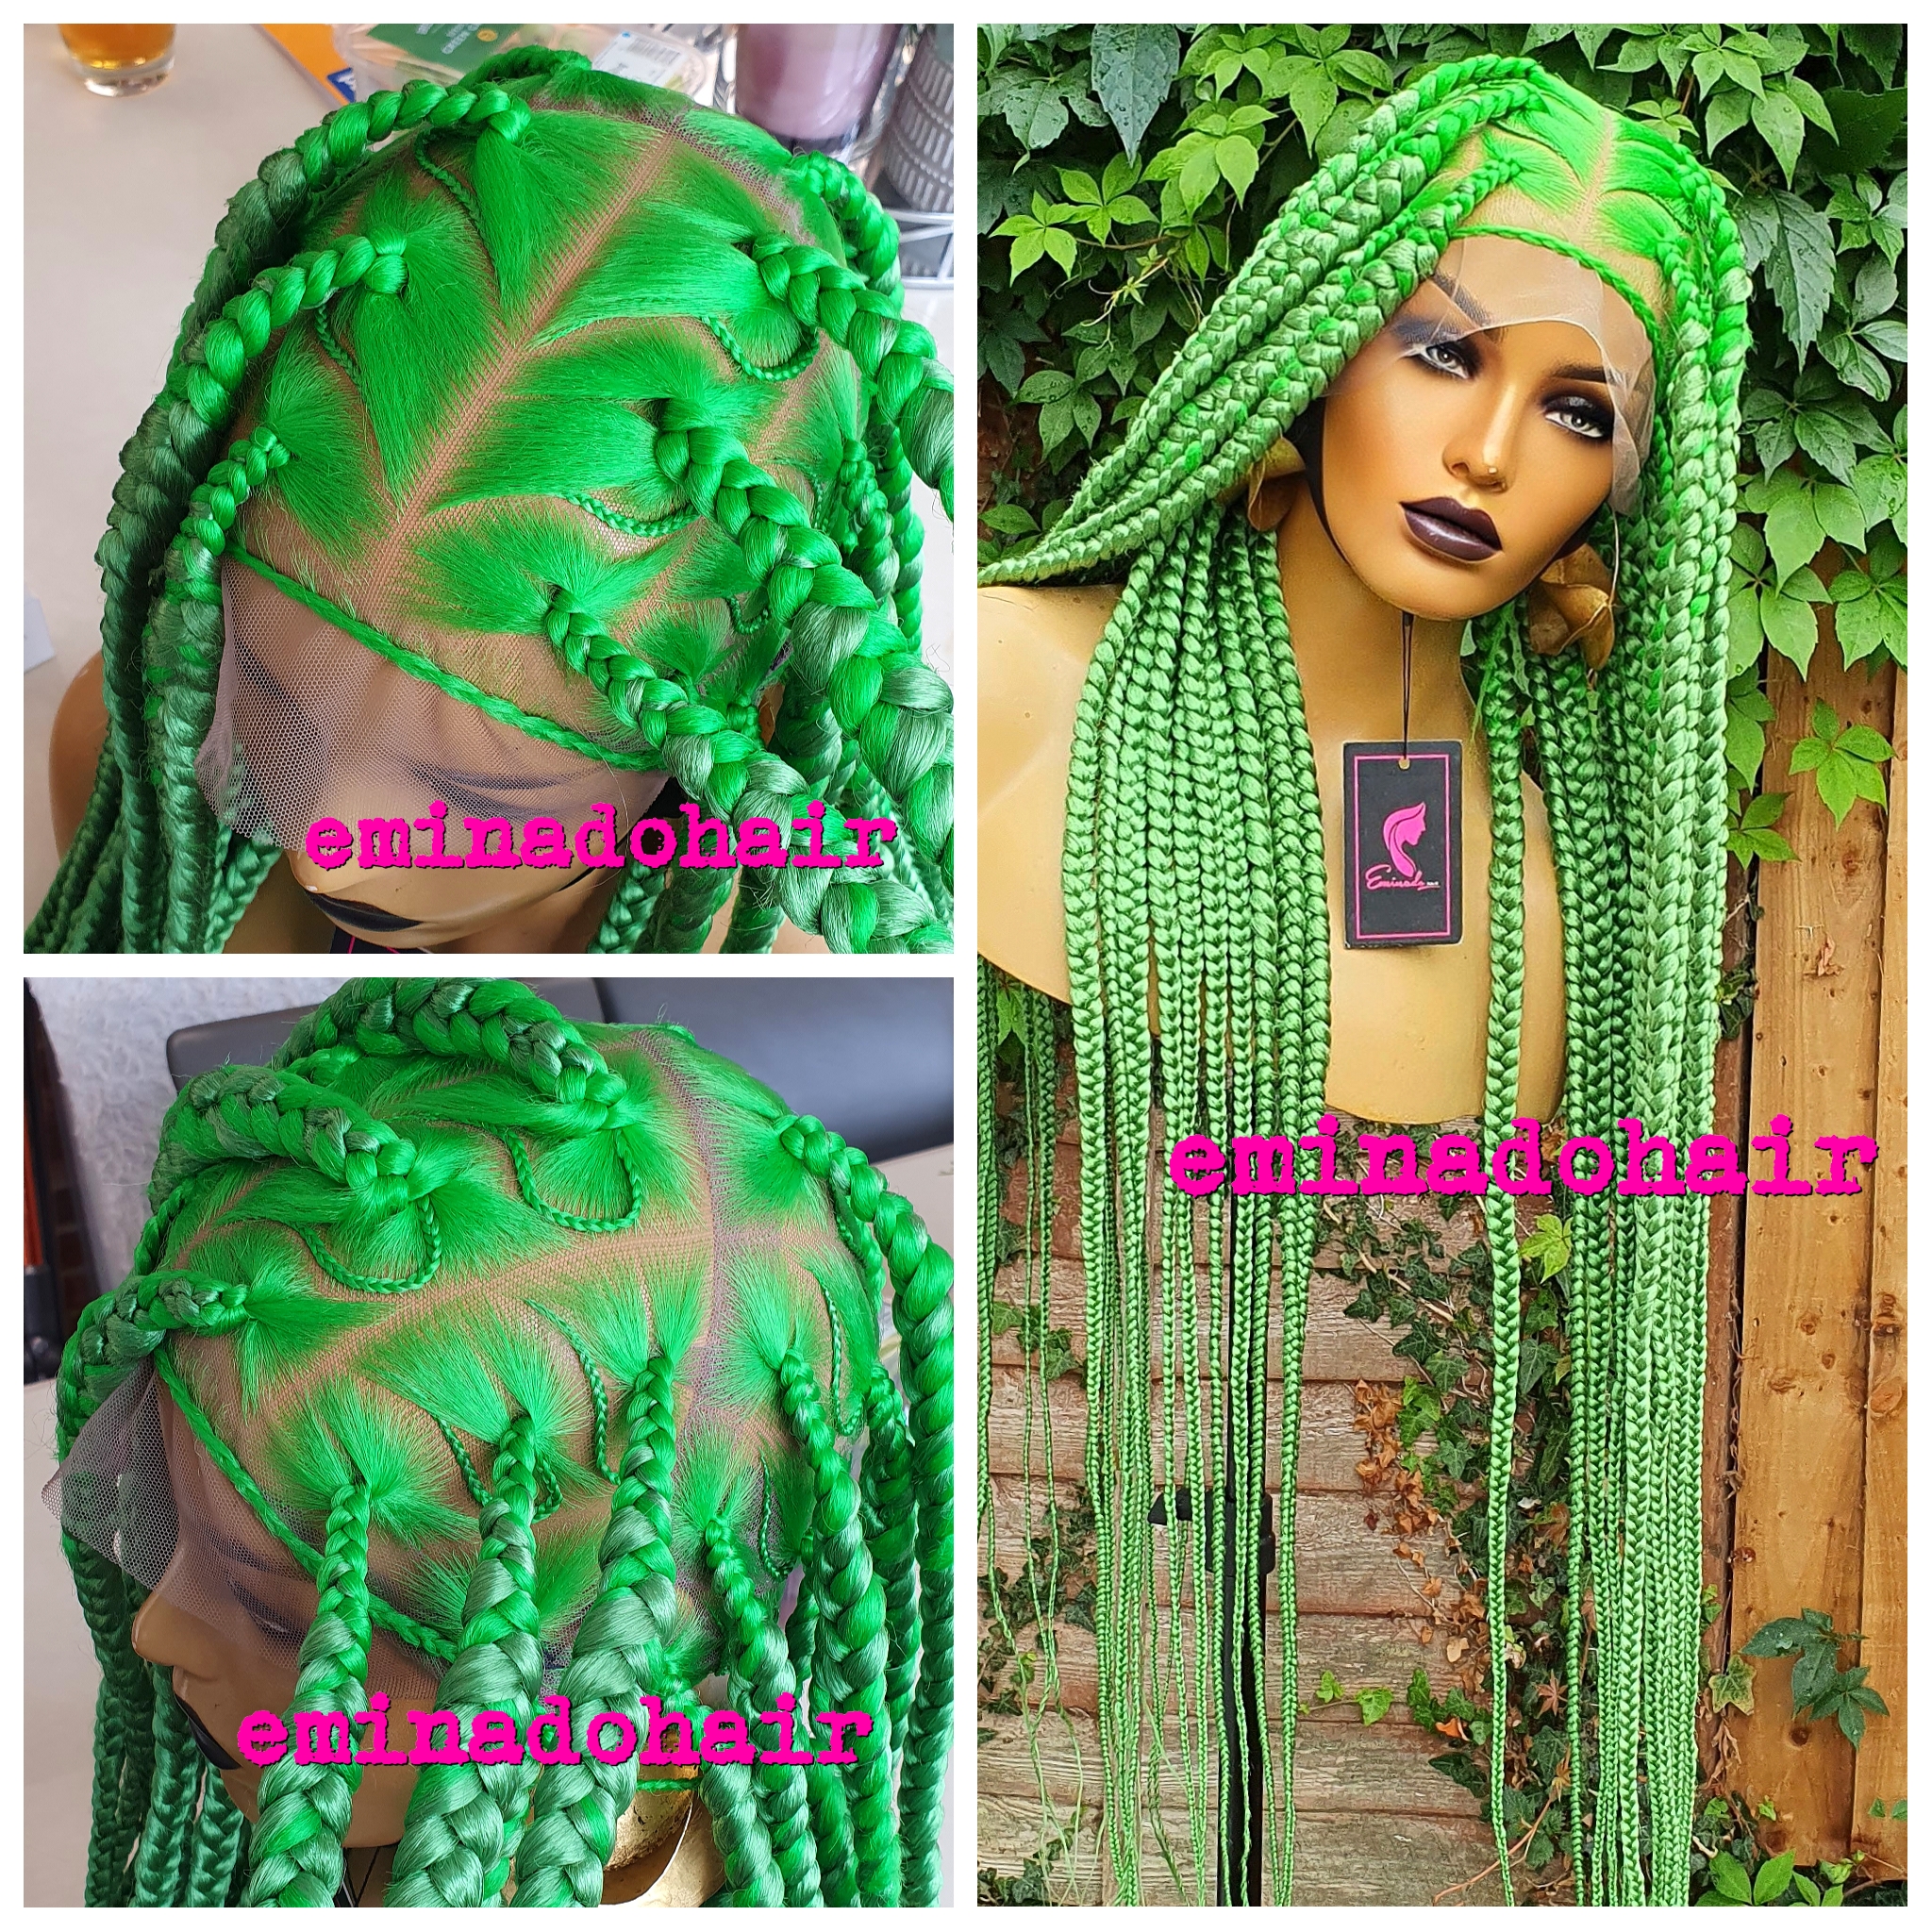 Box braids fully hand braided lace wig- lime green box braids $210  qualityhairbylawlar - Quality Hair By Lawlar